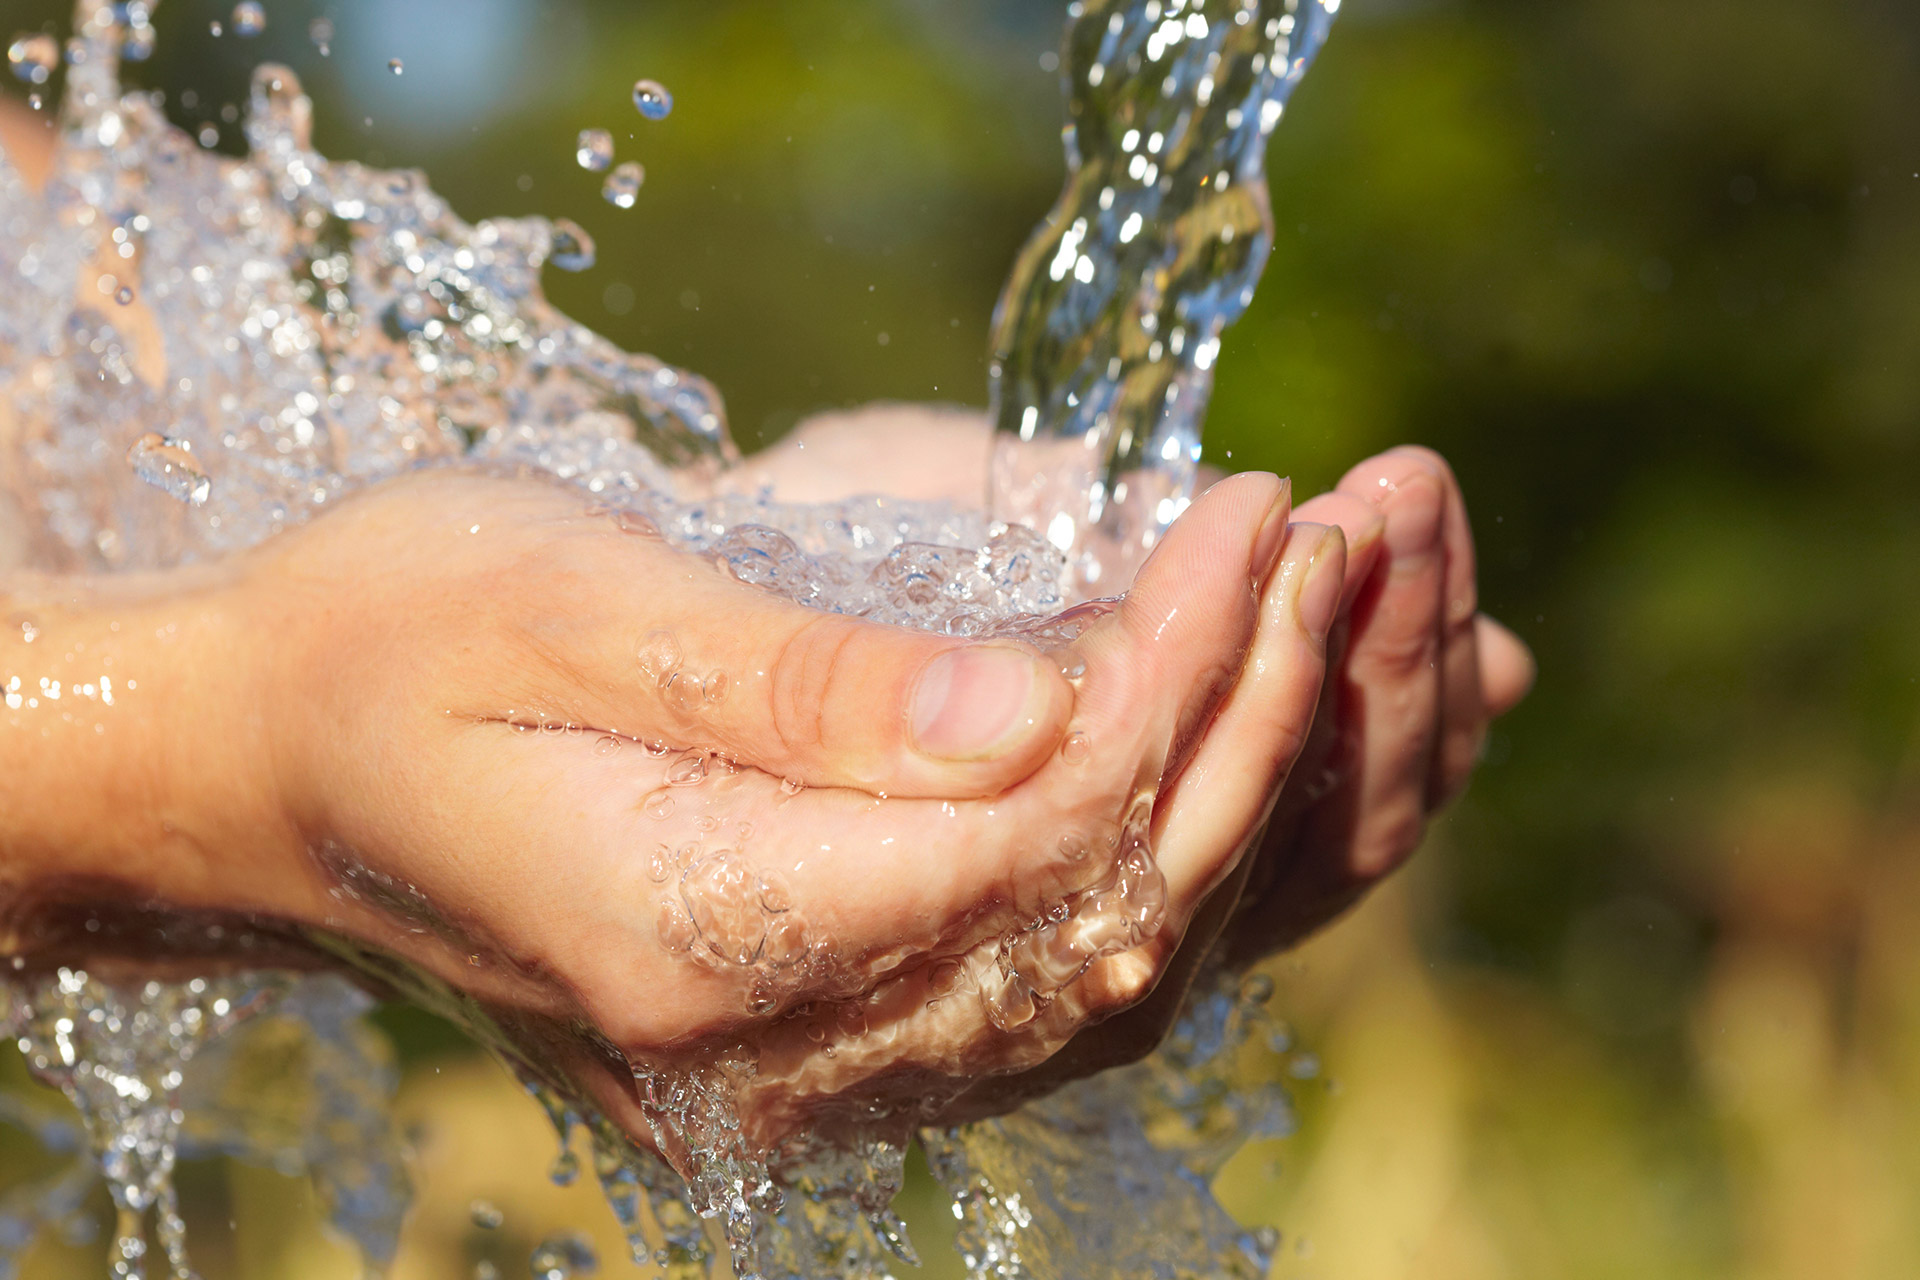 Seattle-area clean water tech startup HaloSource raises $2.2M